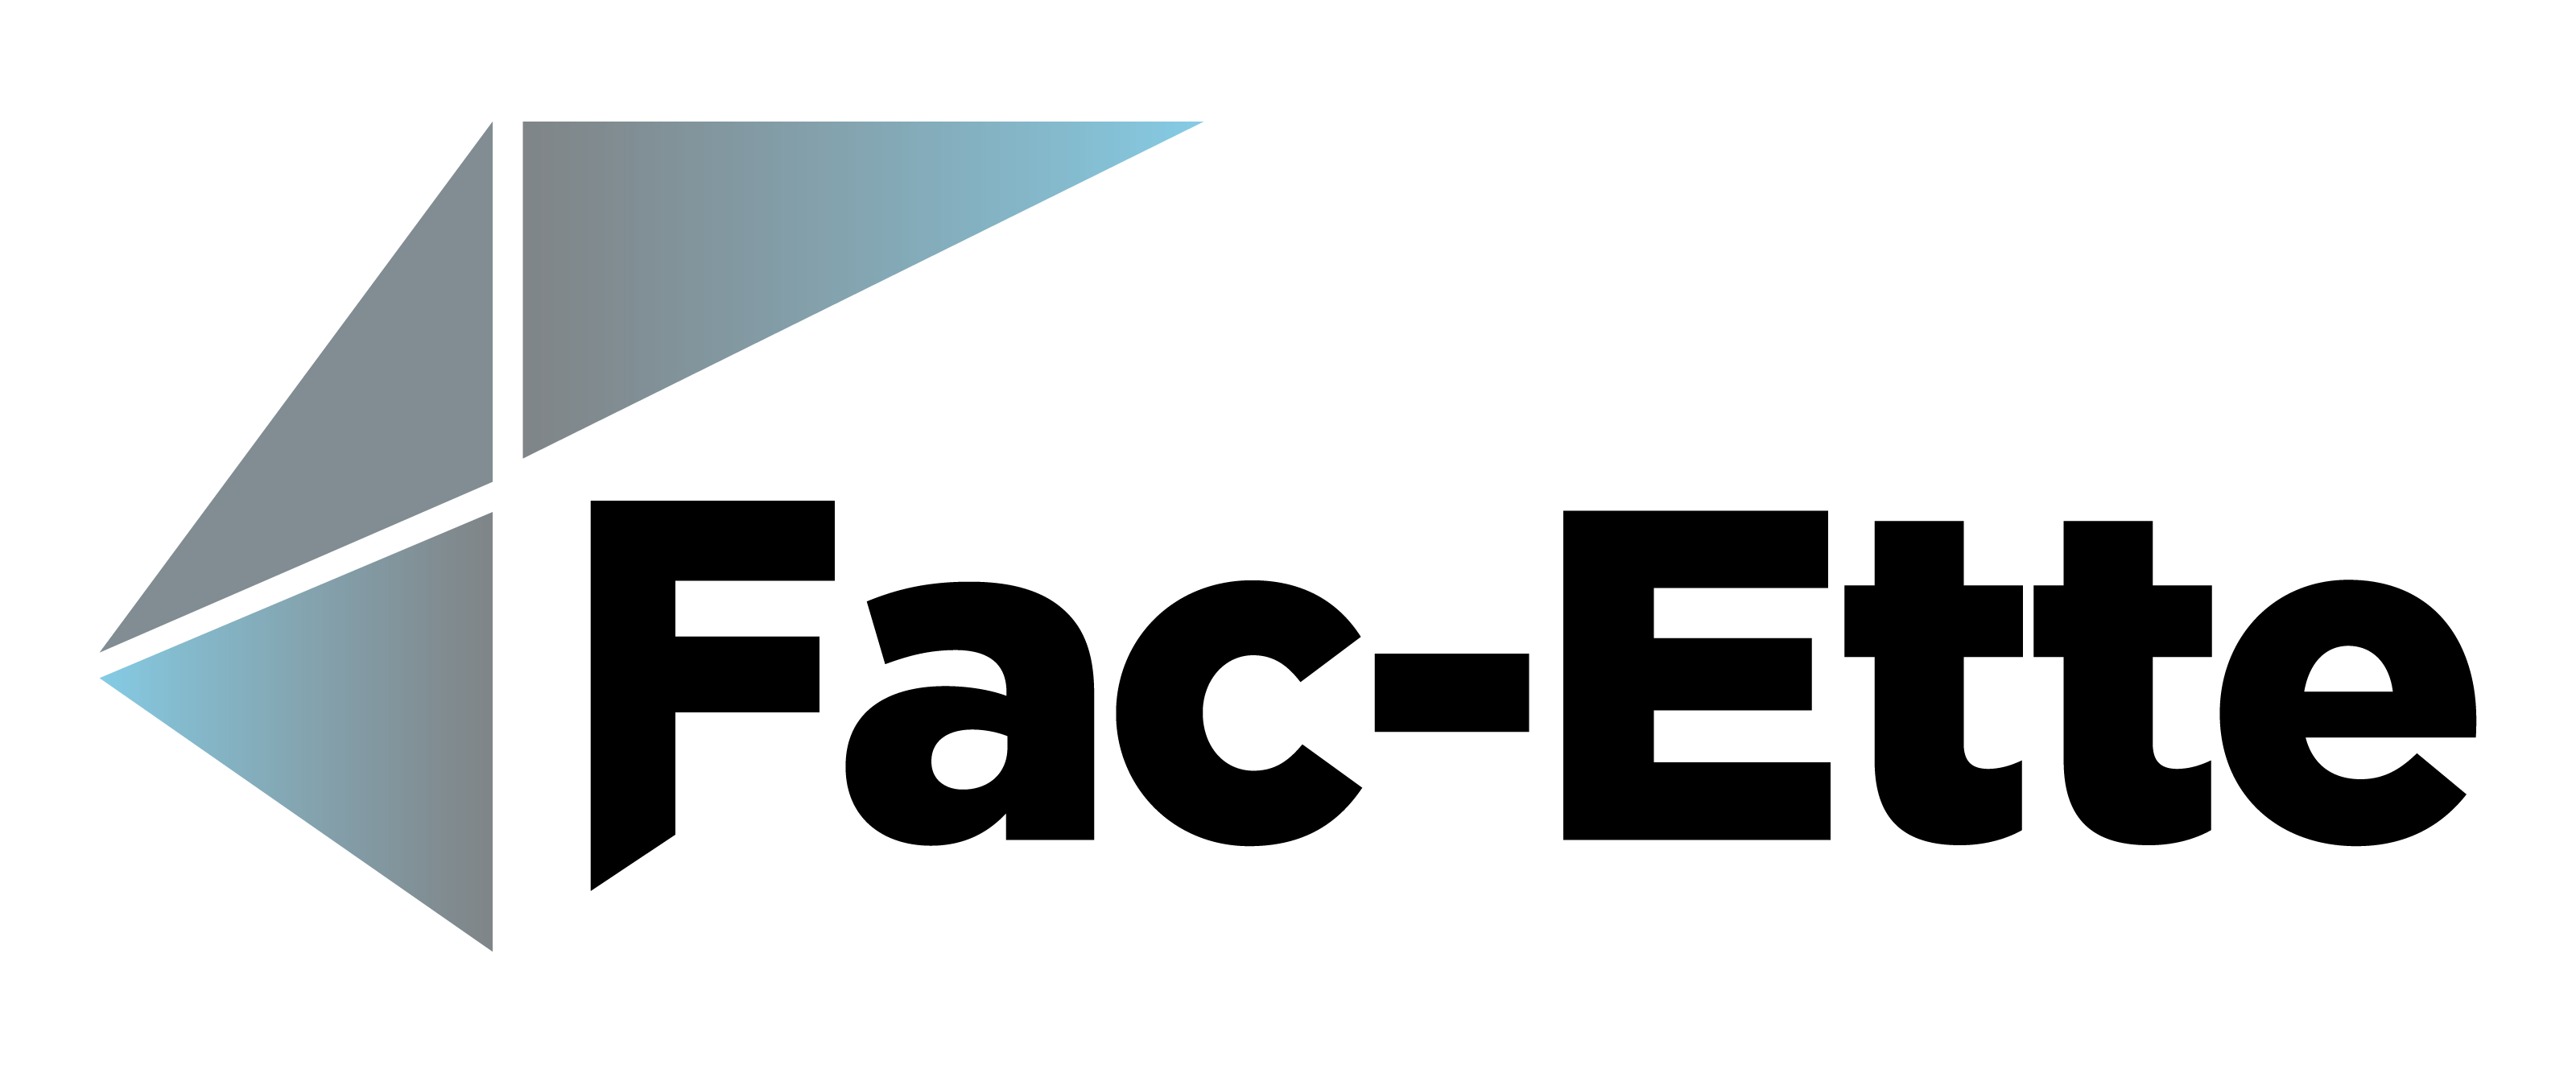 Fac-Ette Manufacturing